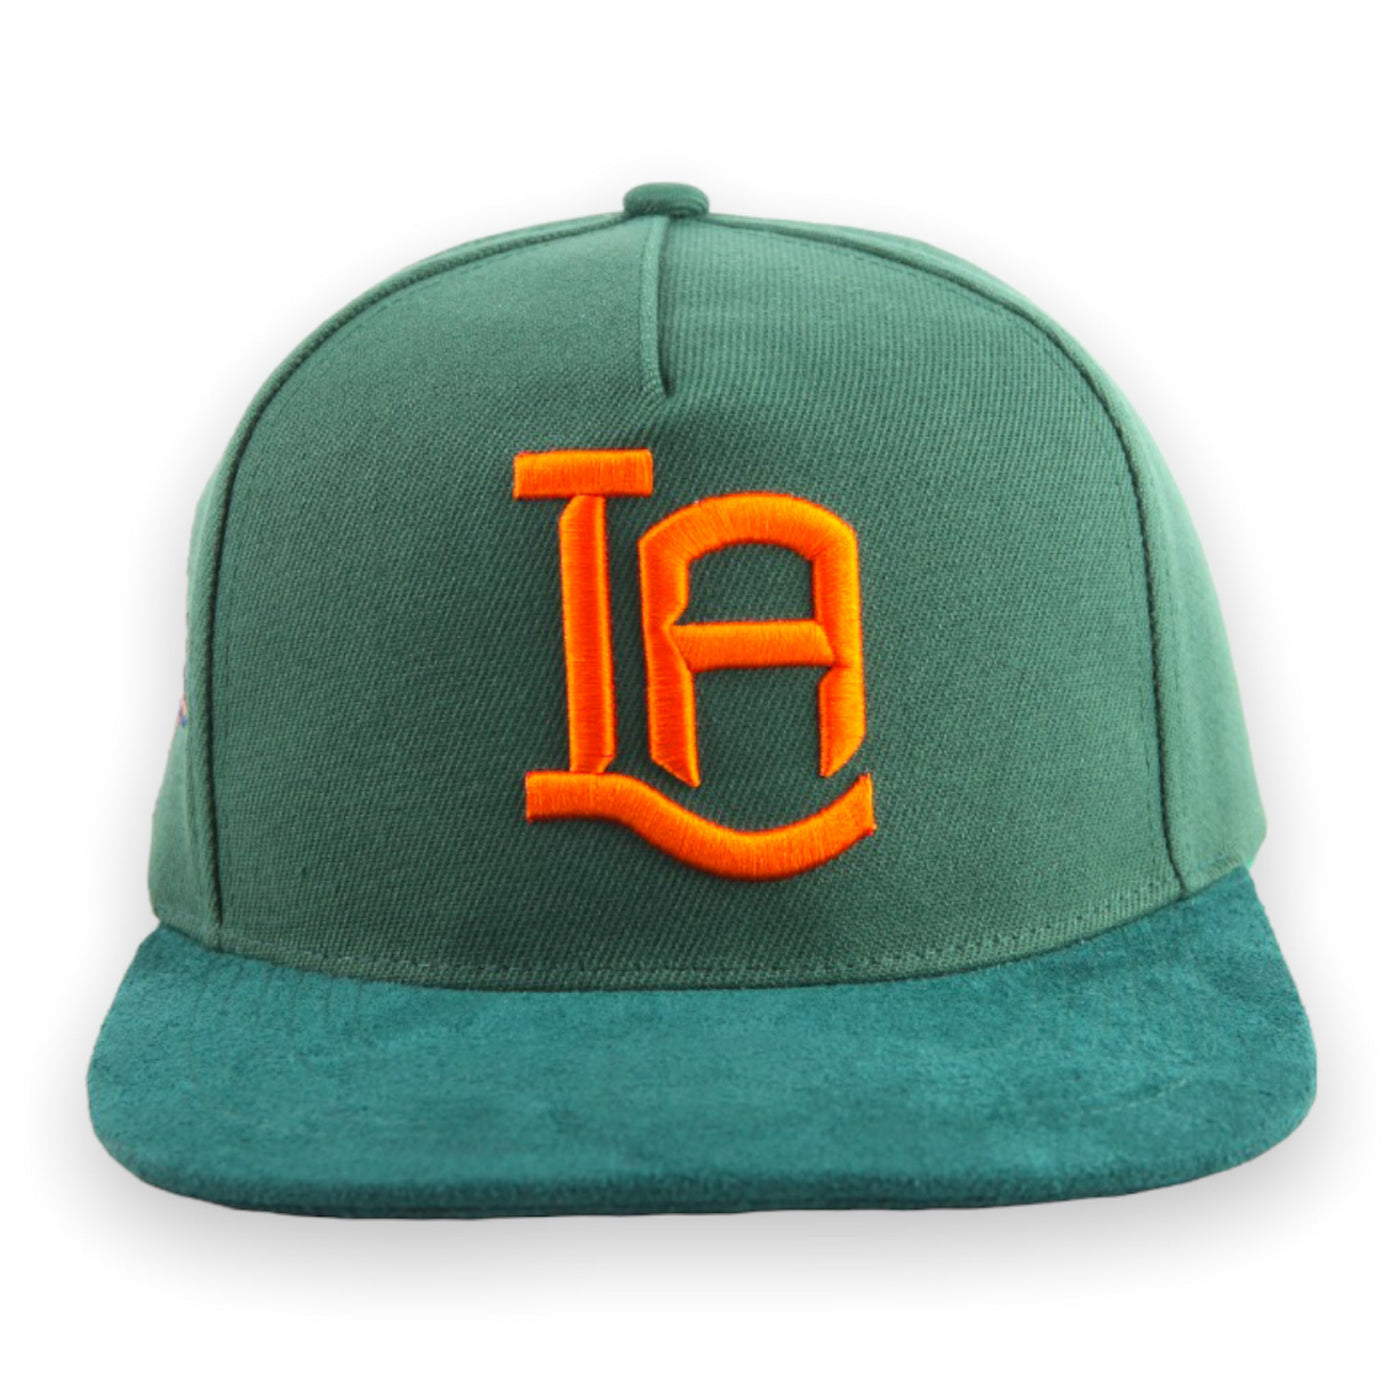 LA World Series Snapback- Emerald/Orange Suede